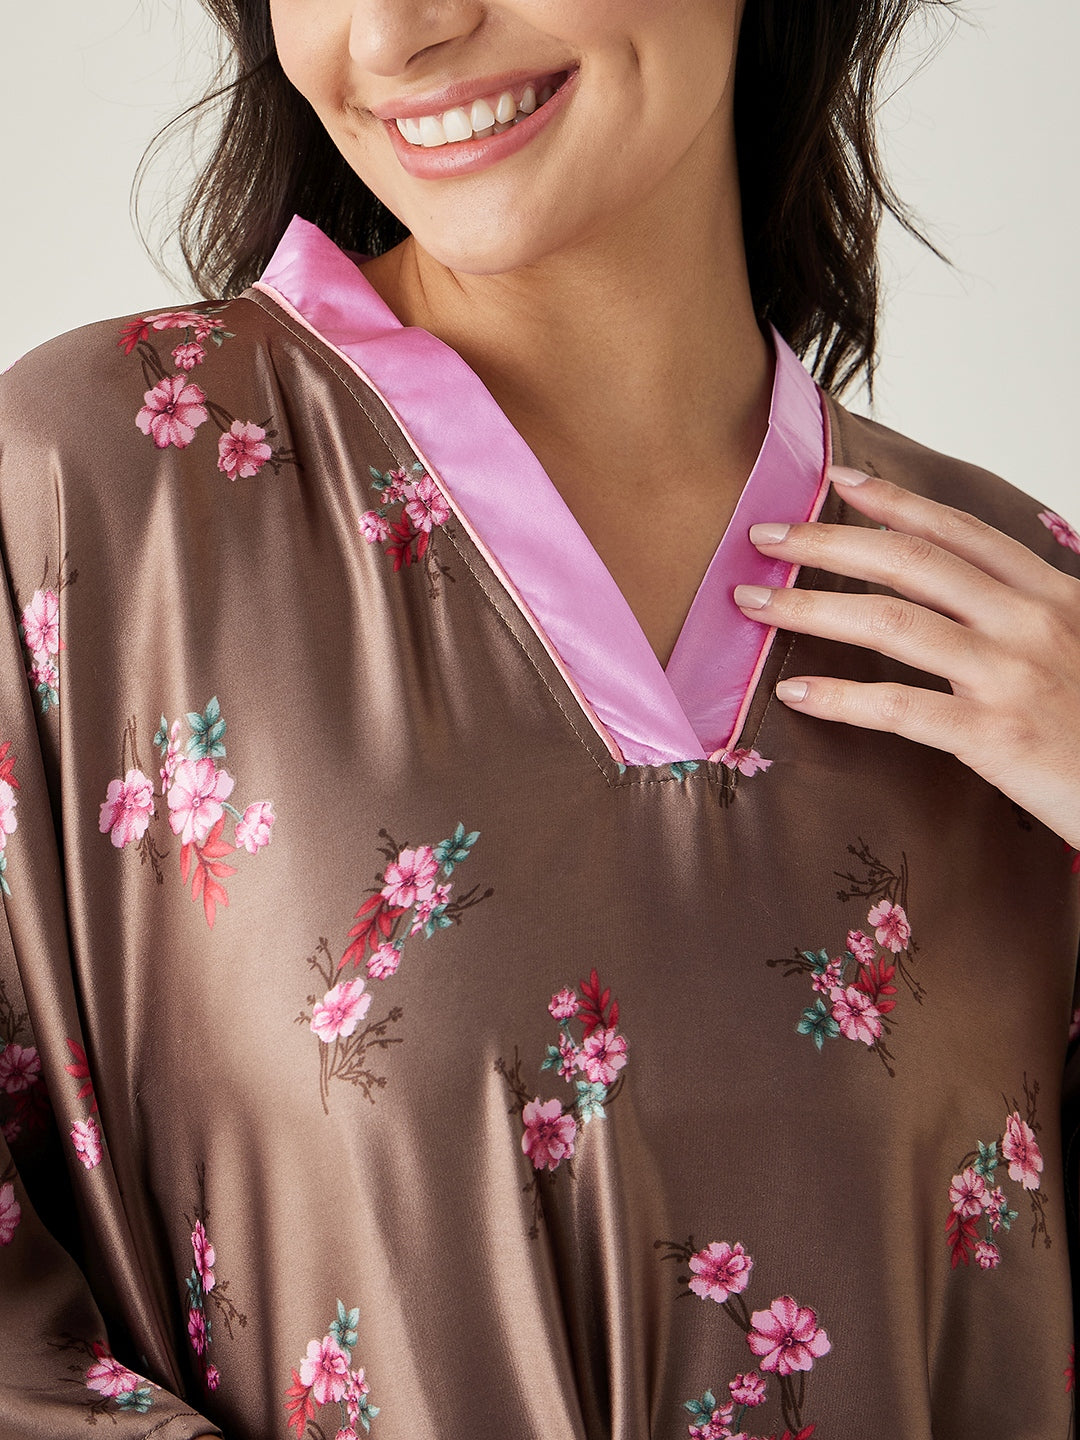 Women's Brown Floral Printed Loungewear Kaftan - The Kaftan Company